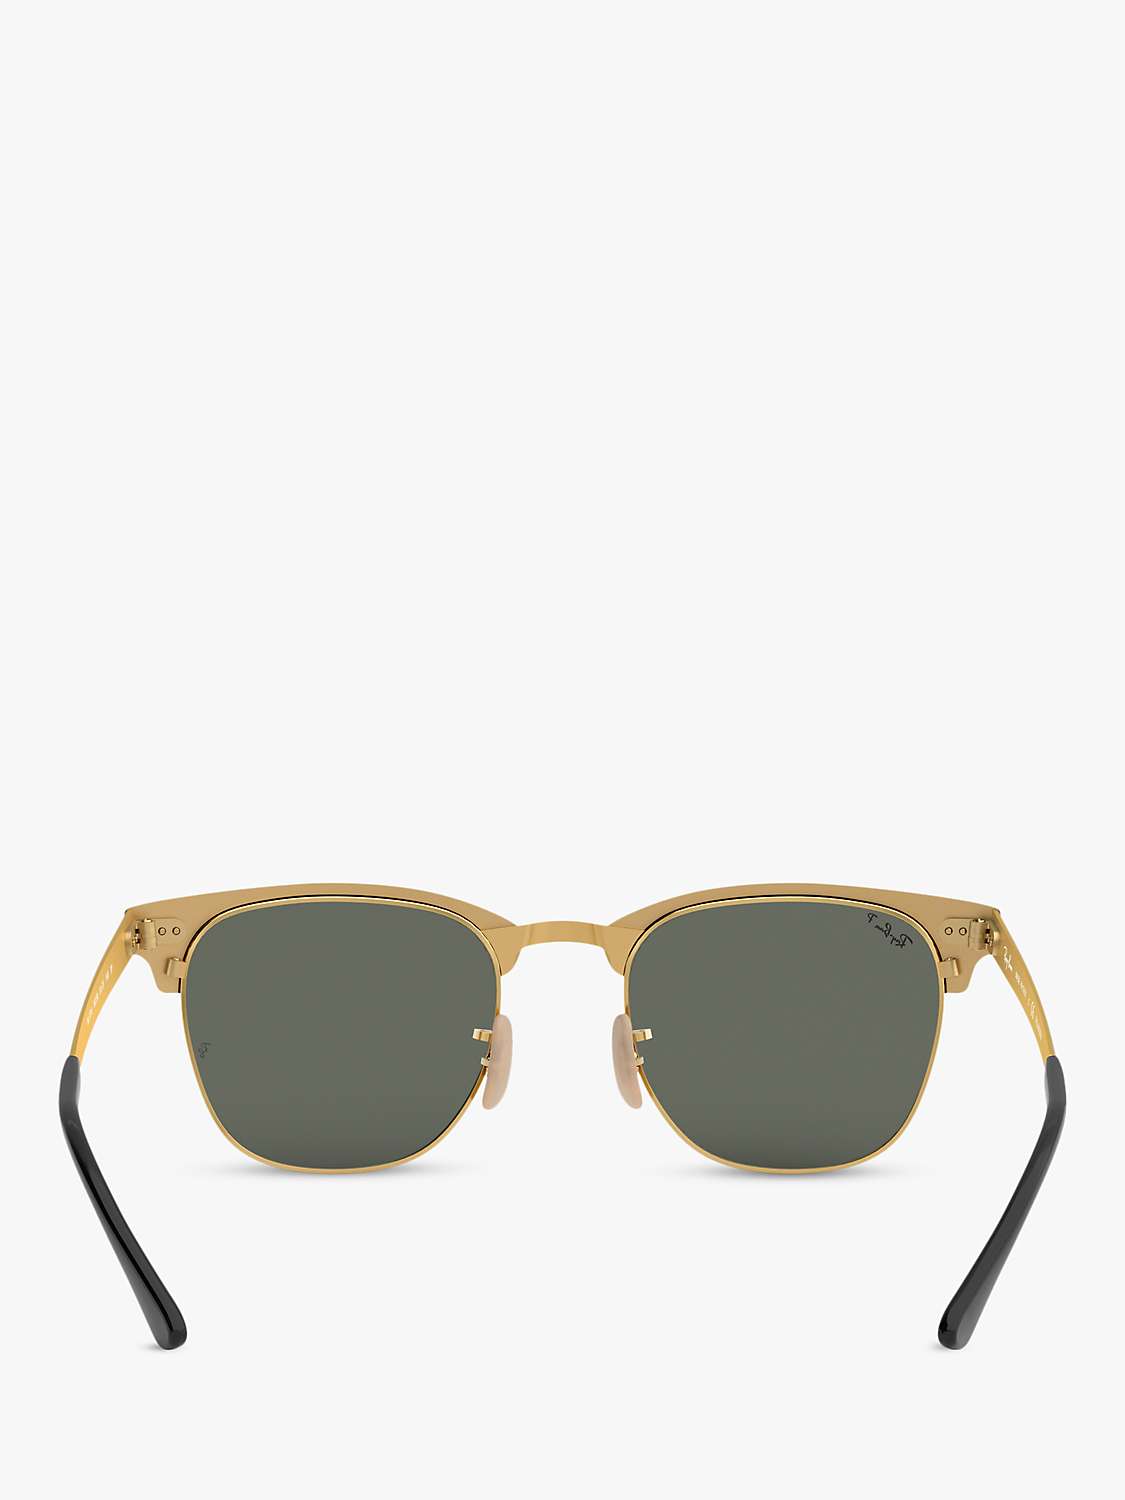 Buy Ray-Ban RB3716 Unisex Square Polarised Sunglasses, Black/Gold Online at johnlewis.com